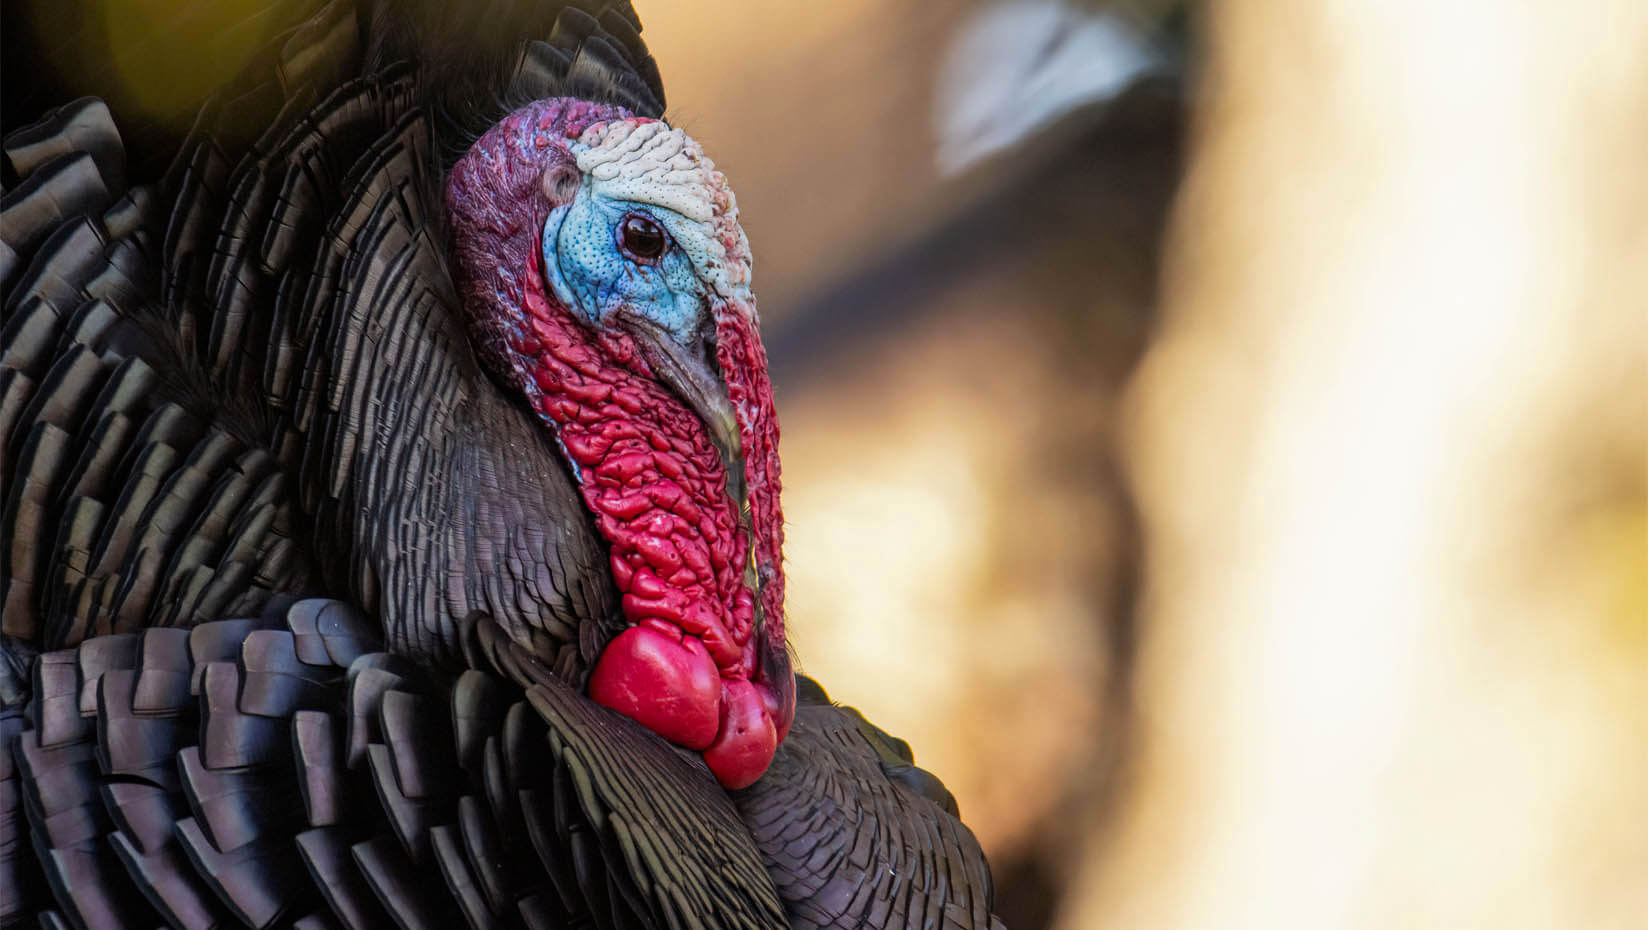 A close up image of a wild turkey